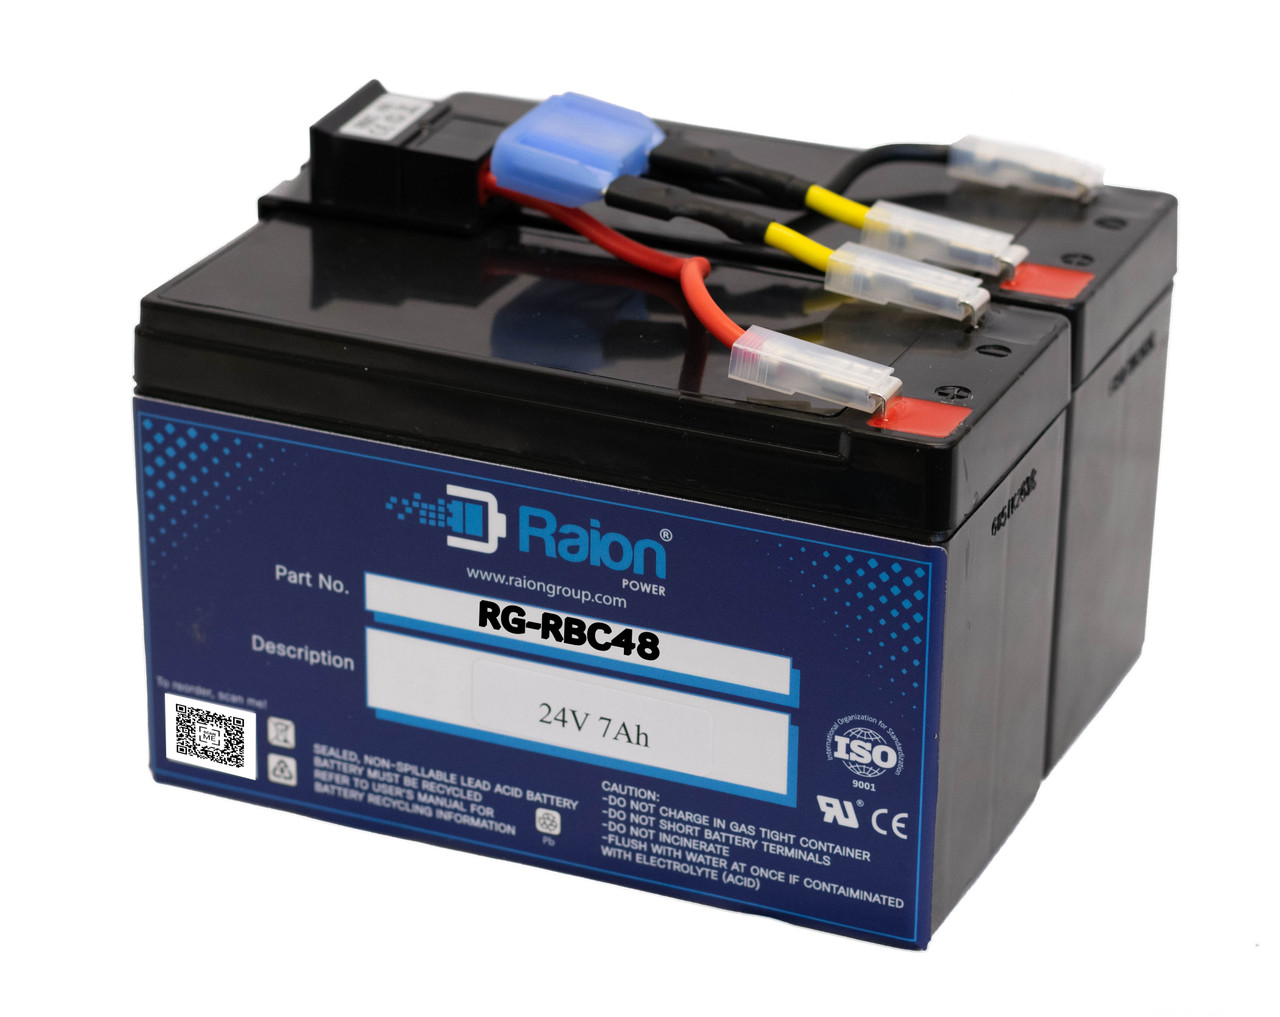 Raion Power RG-RBC48 replacement RBC48 battery cartridge for APC RBC48